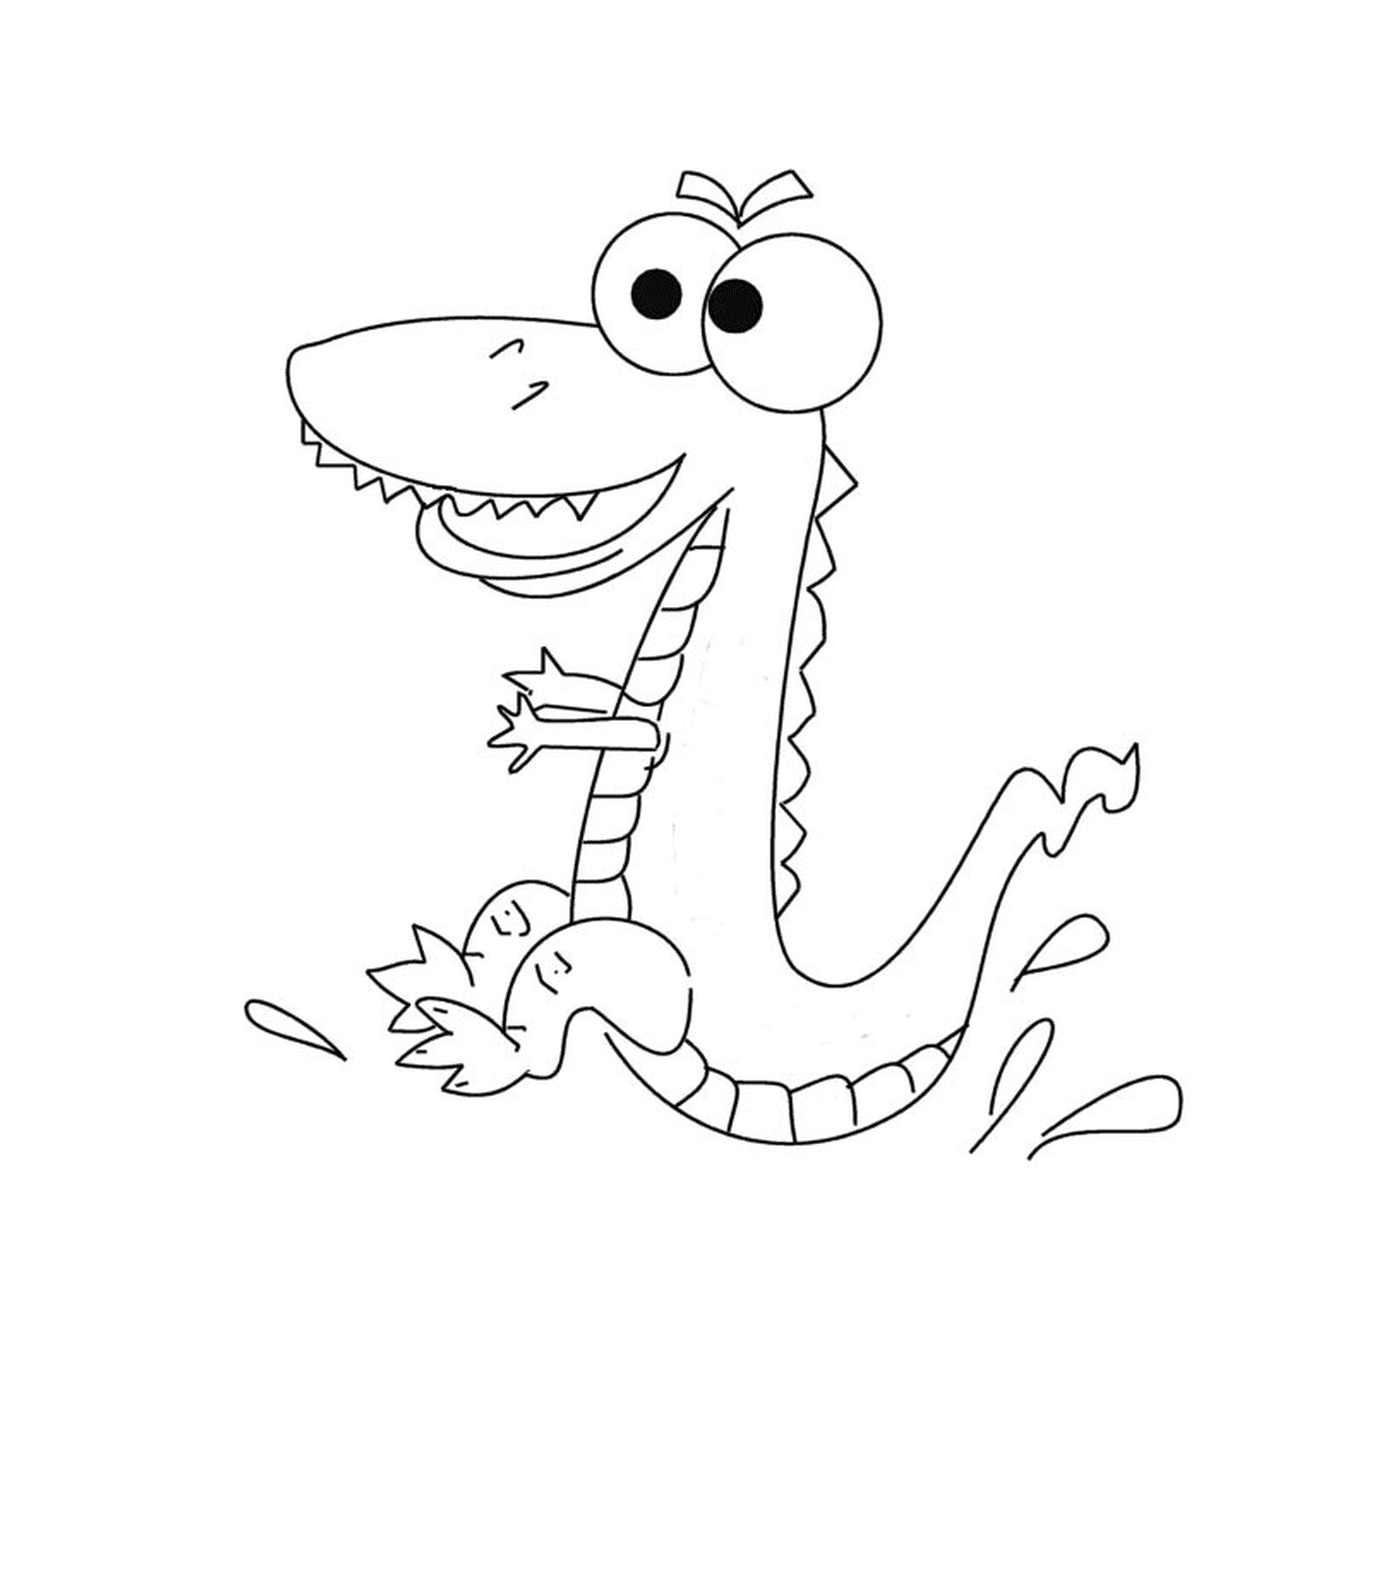  A crocodile 